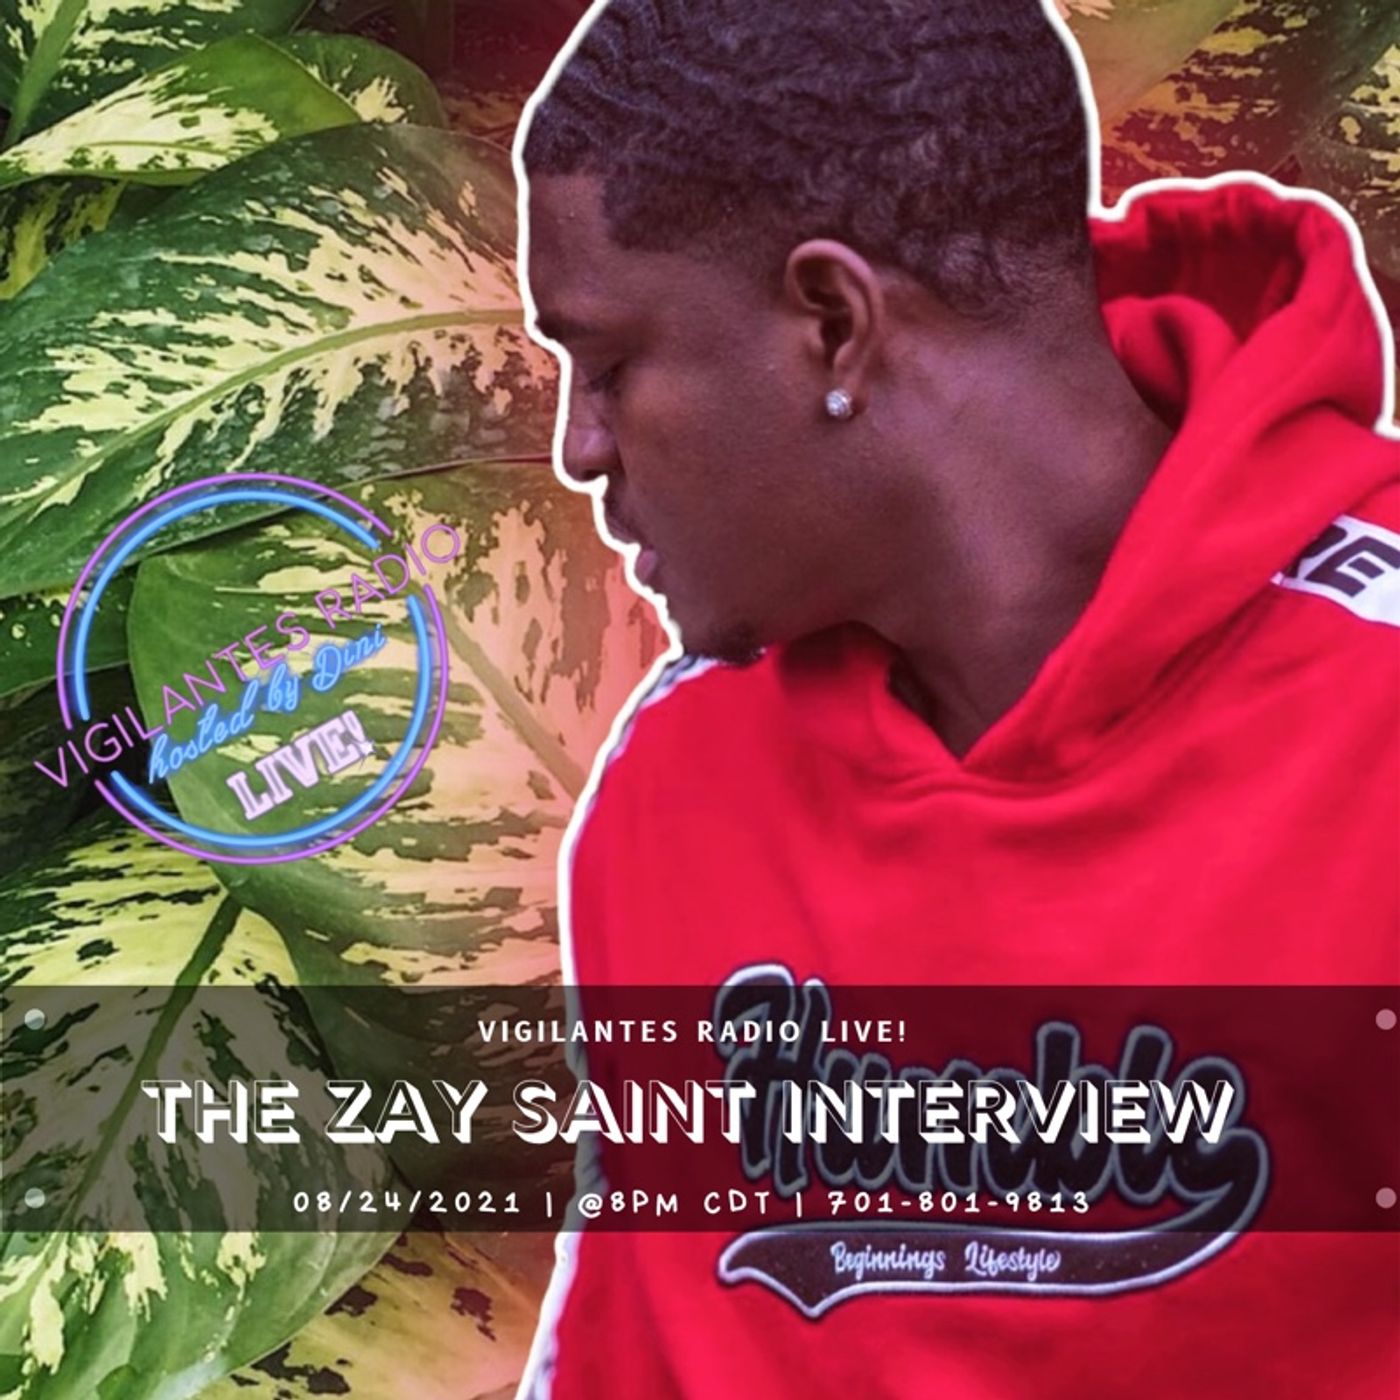 The Zay Saint Interview. Image